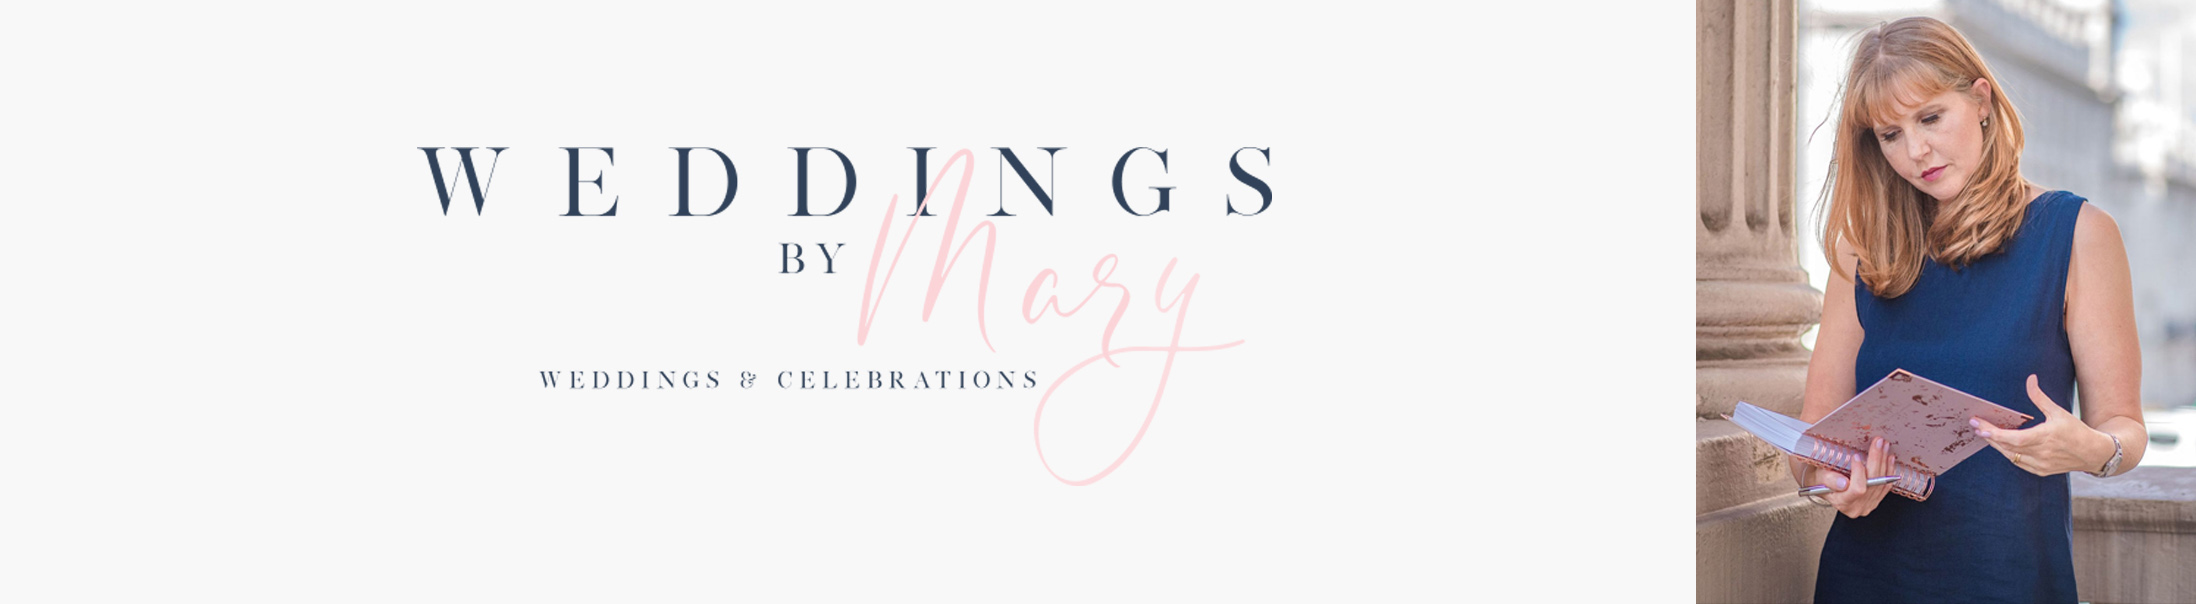 Top UK Wedding Planners - Weddings by Mary